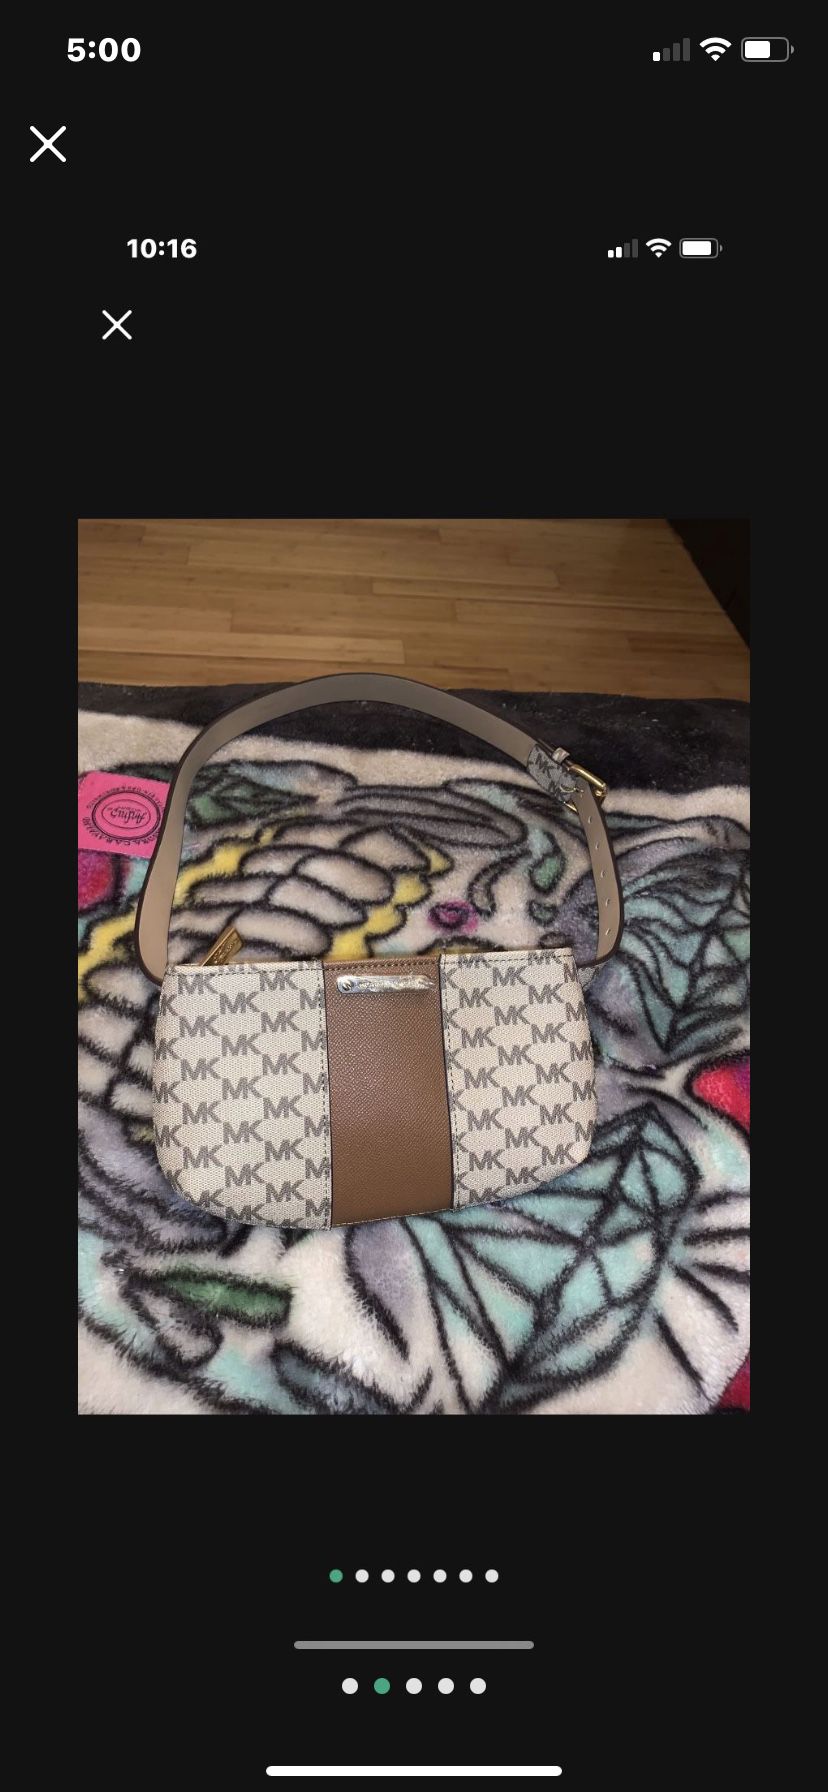 Bag $45